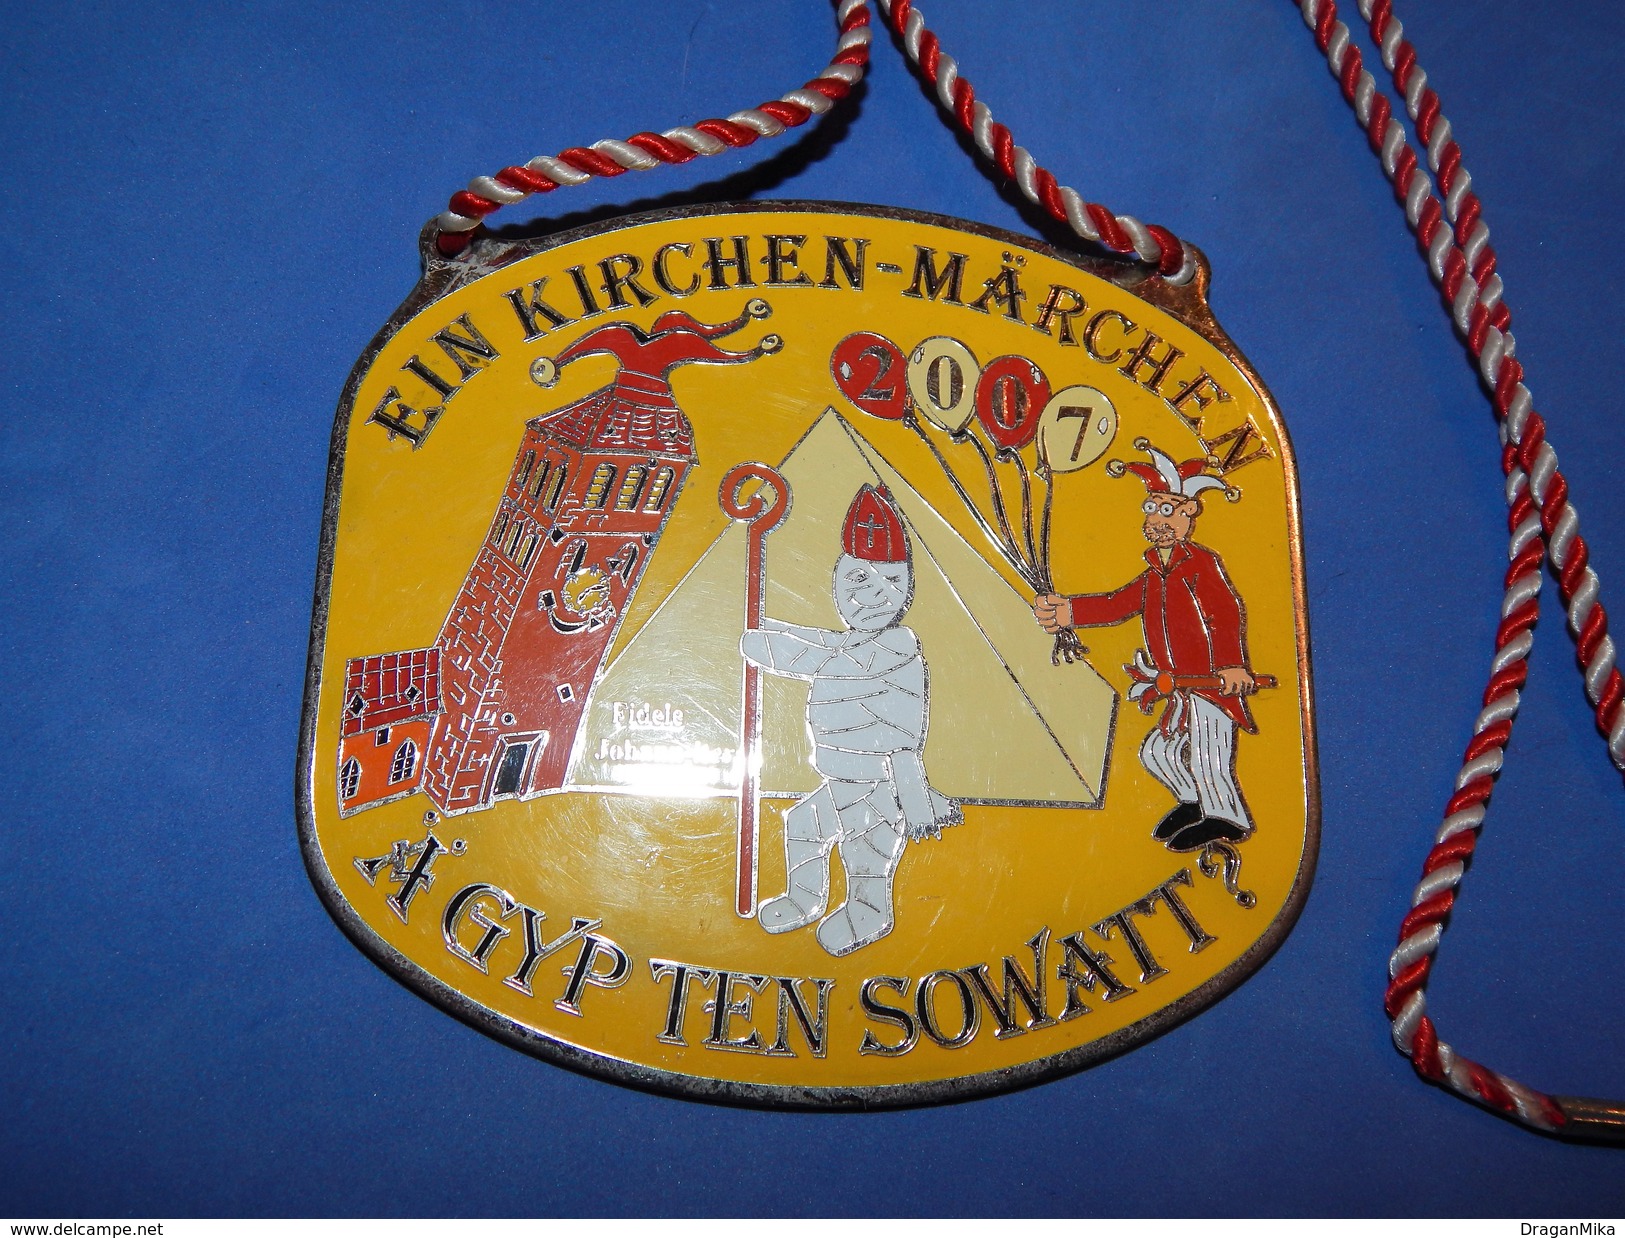 Huge ''Schutz'' Medal: EIN KIRCHEN - MARCHEN 2007 A GYP TEN SOWAT? - Carnival